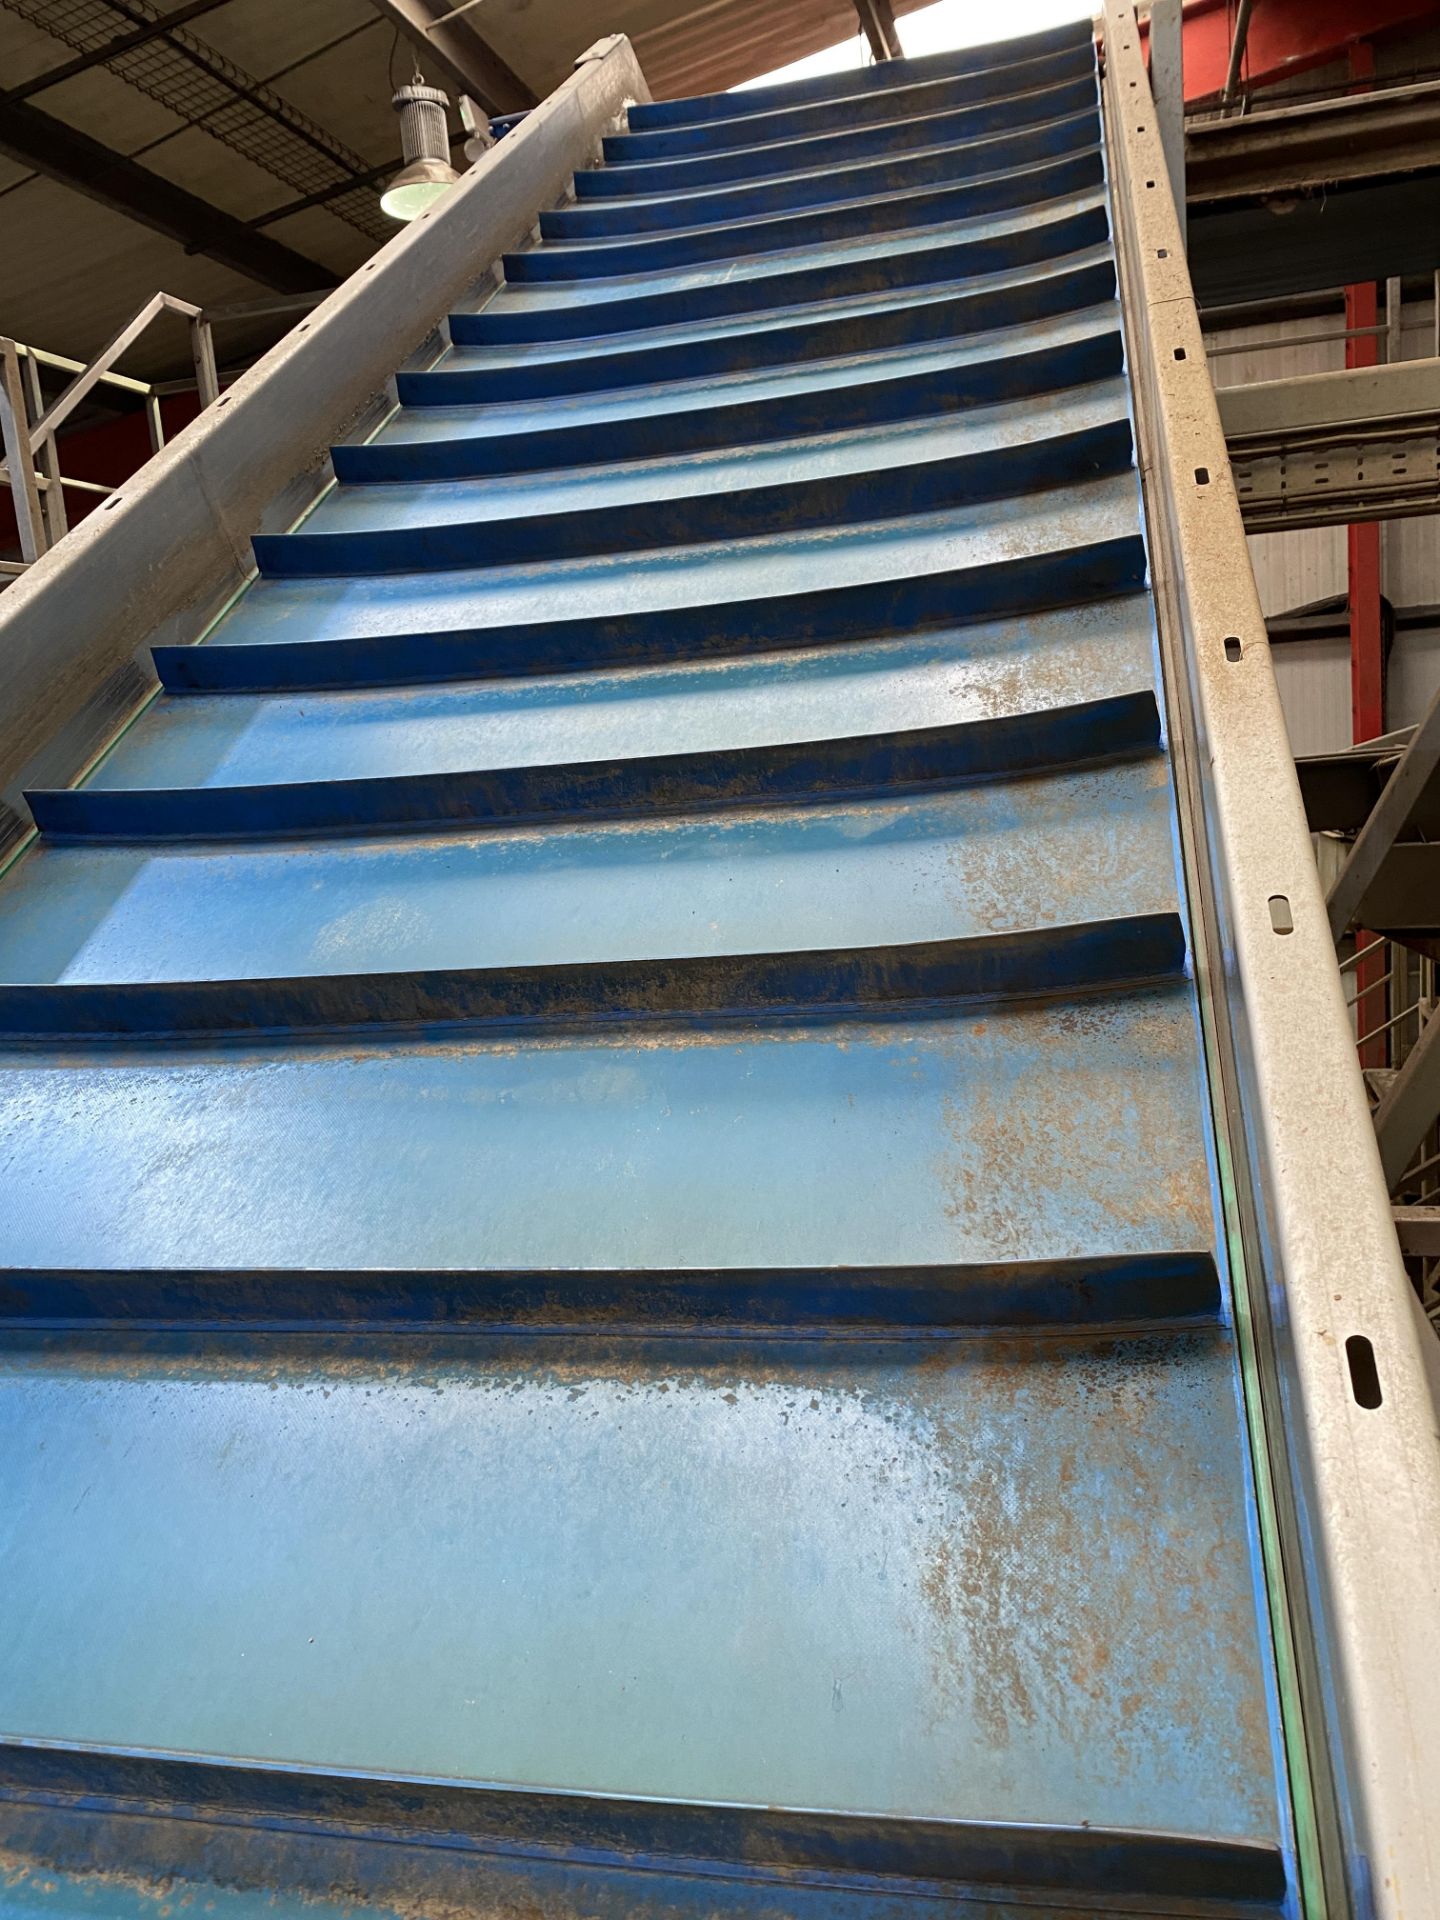 Stainless Steel Elevated Conveyor - Image 2 of 2